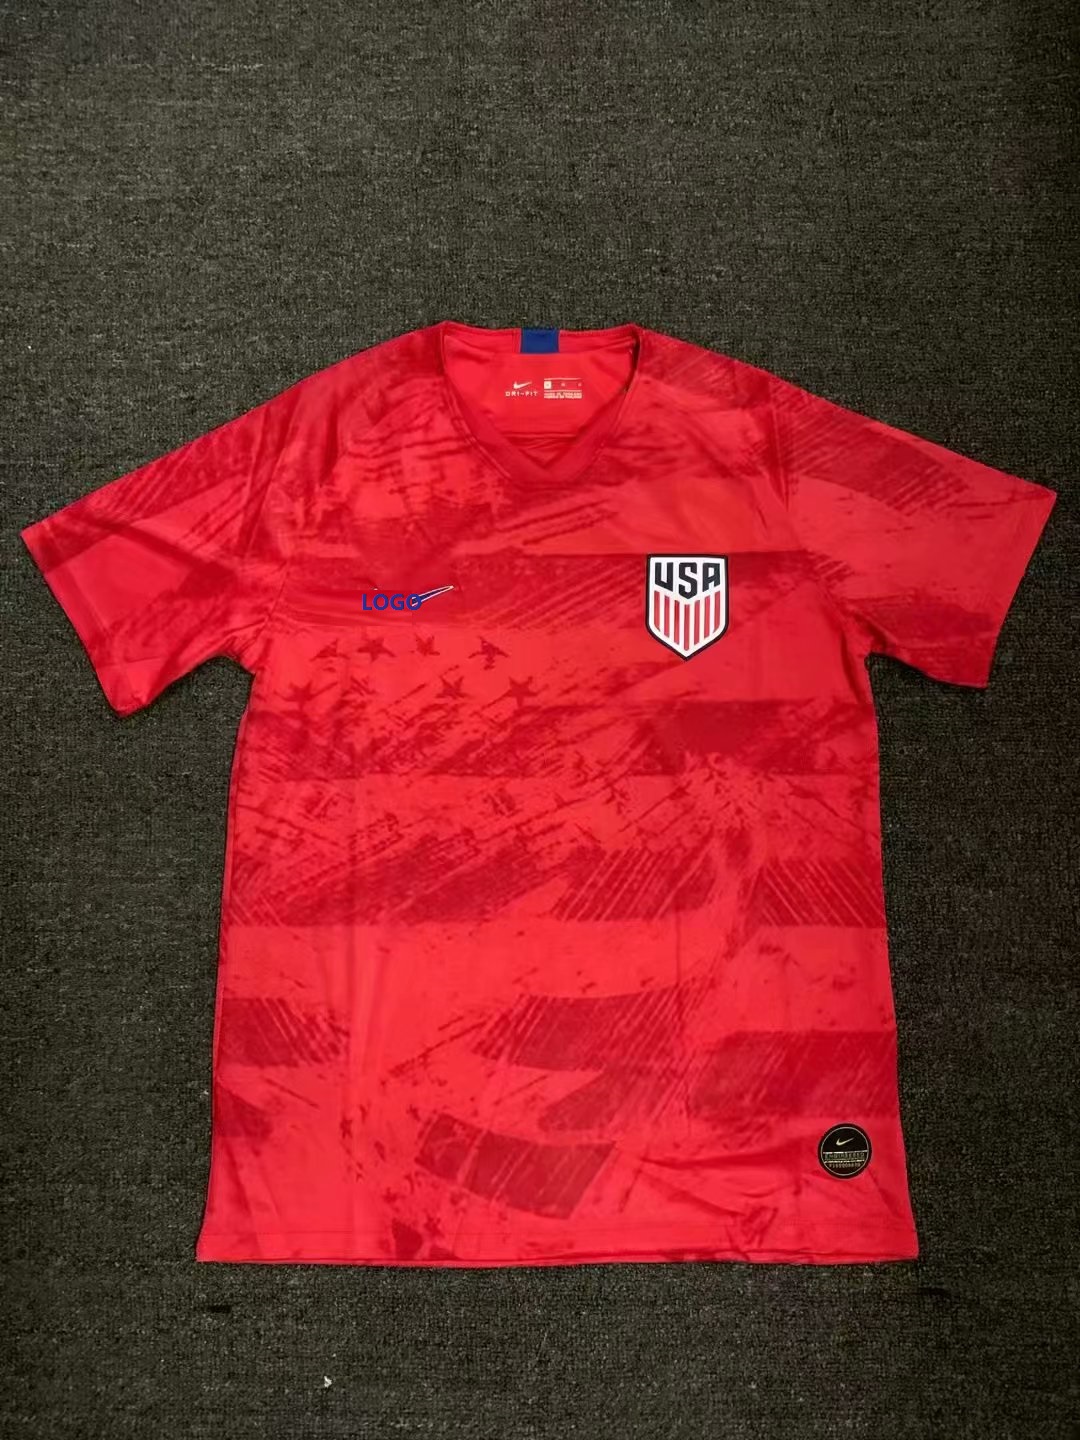 2019 us soccer jersey